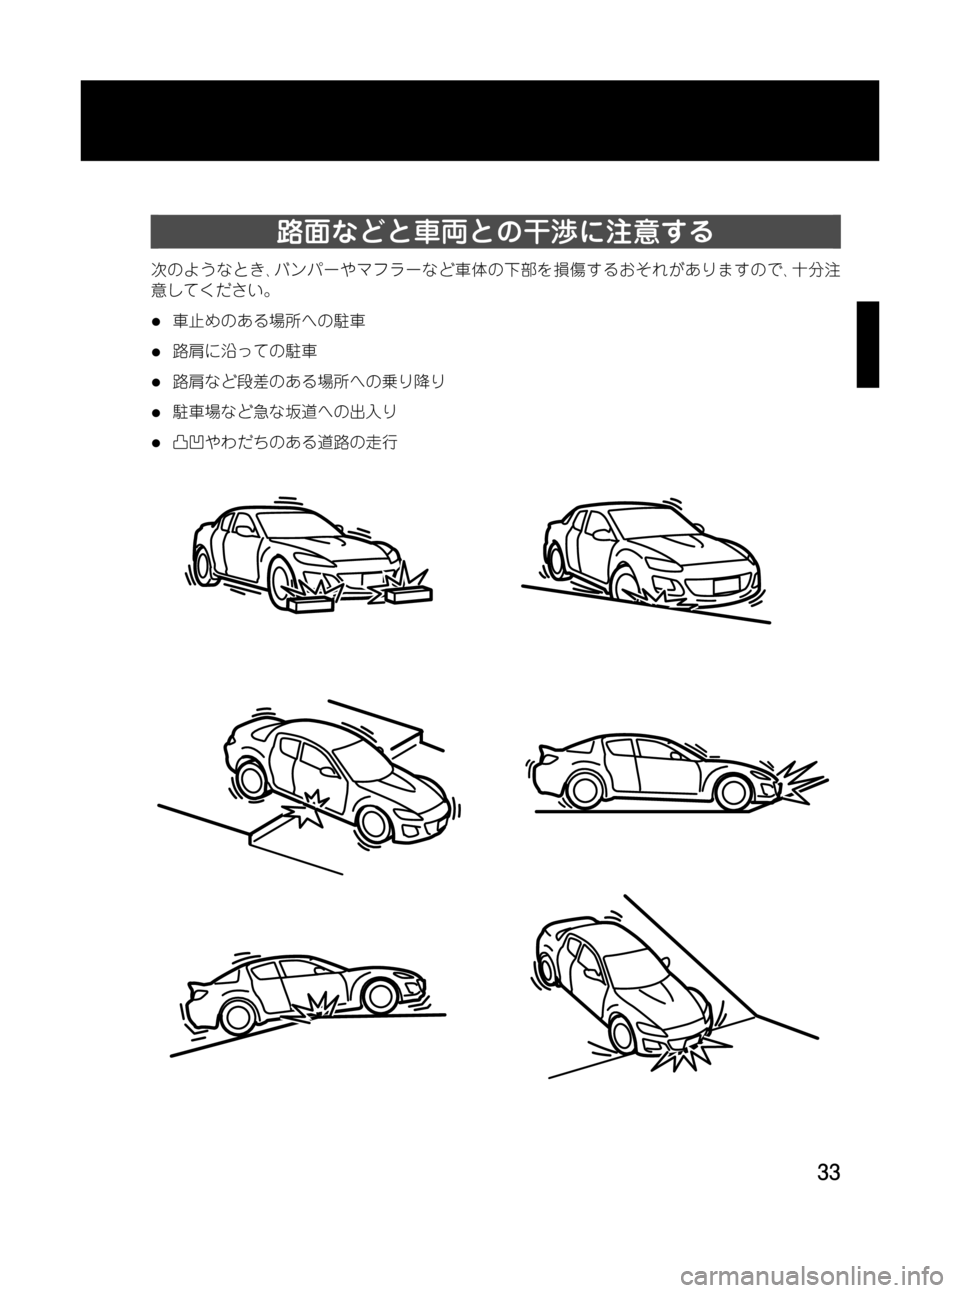 MAZDA MODEL RX 8 2008  取扱説明書 (in Japanese) Black plate (33,1)
路面などと車両との干渉に注意する
次のようなとき､バンパーやマフラーなど車体の下部を損傷するおそれがありますので､十分注
�